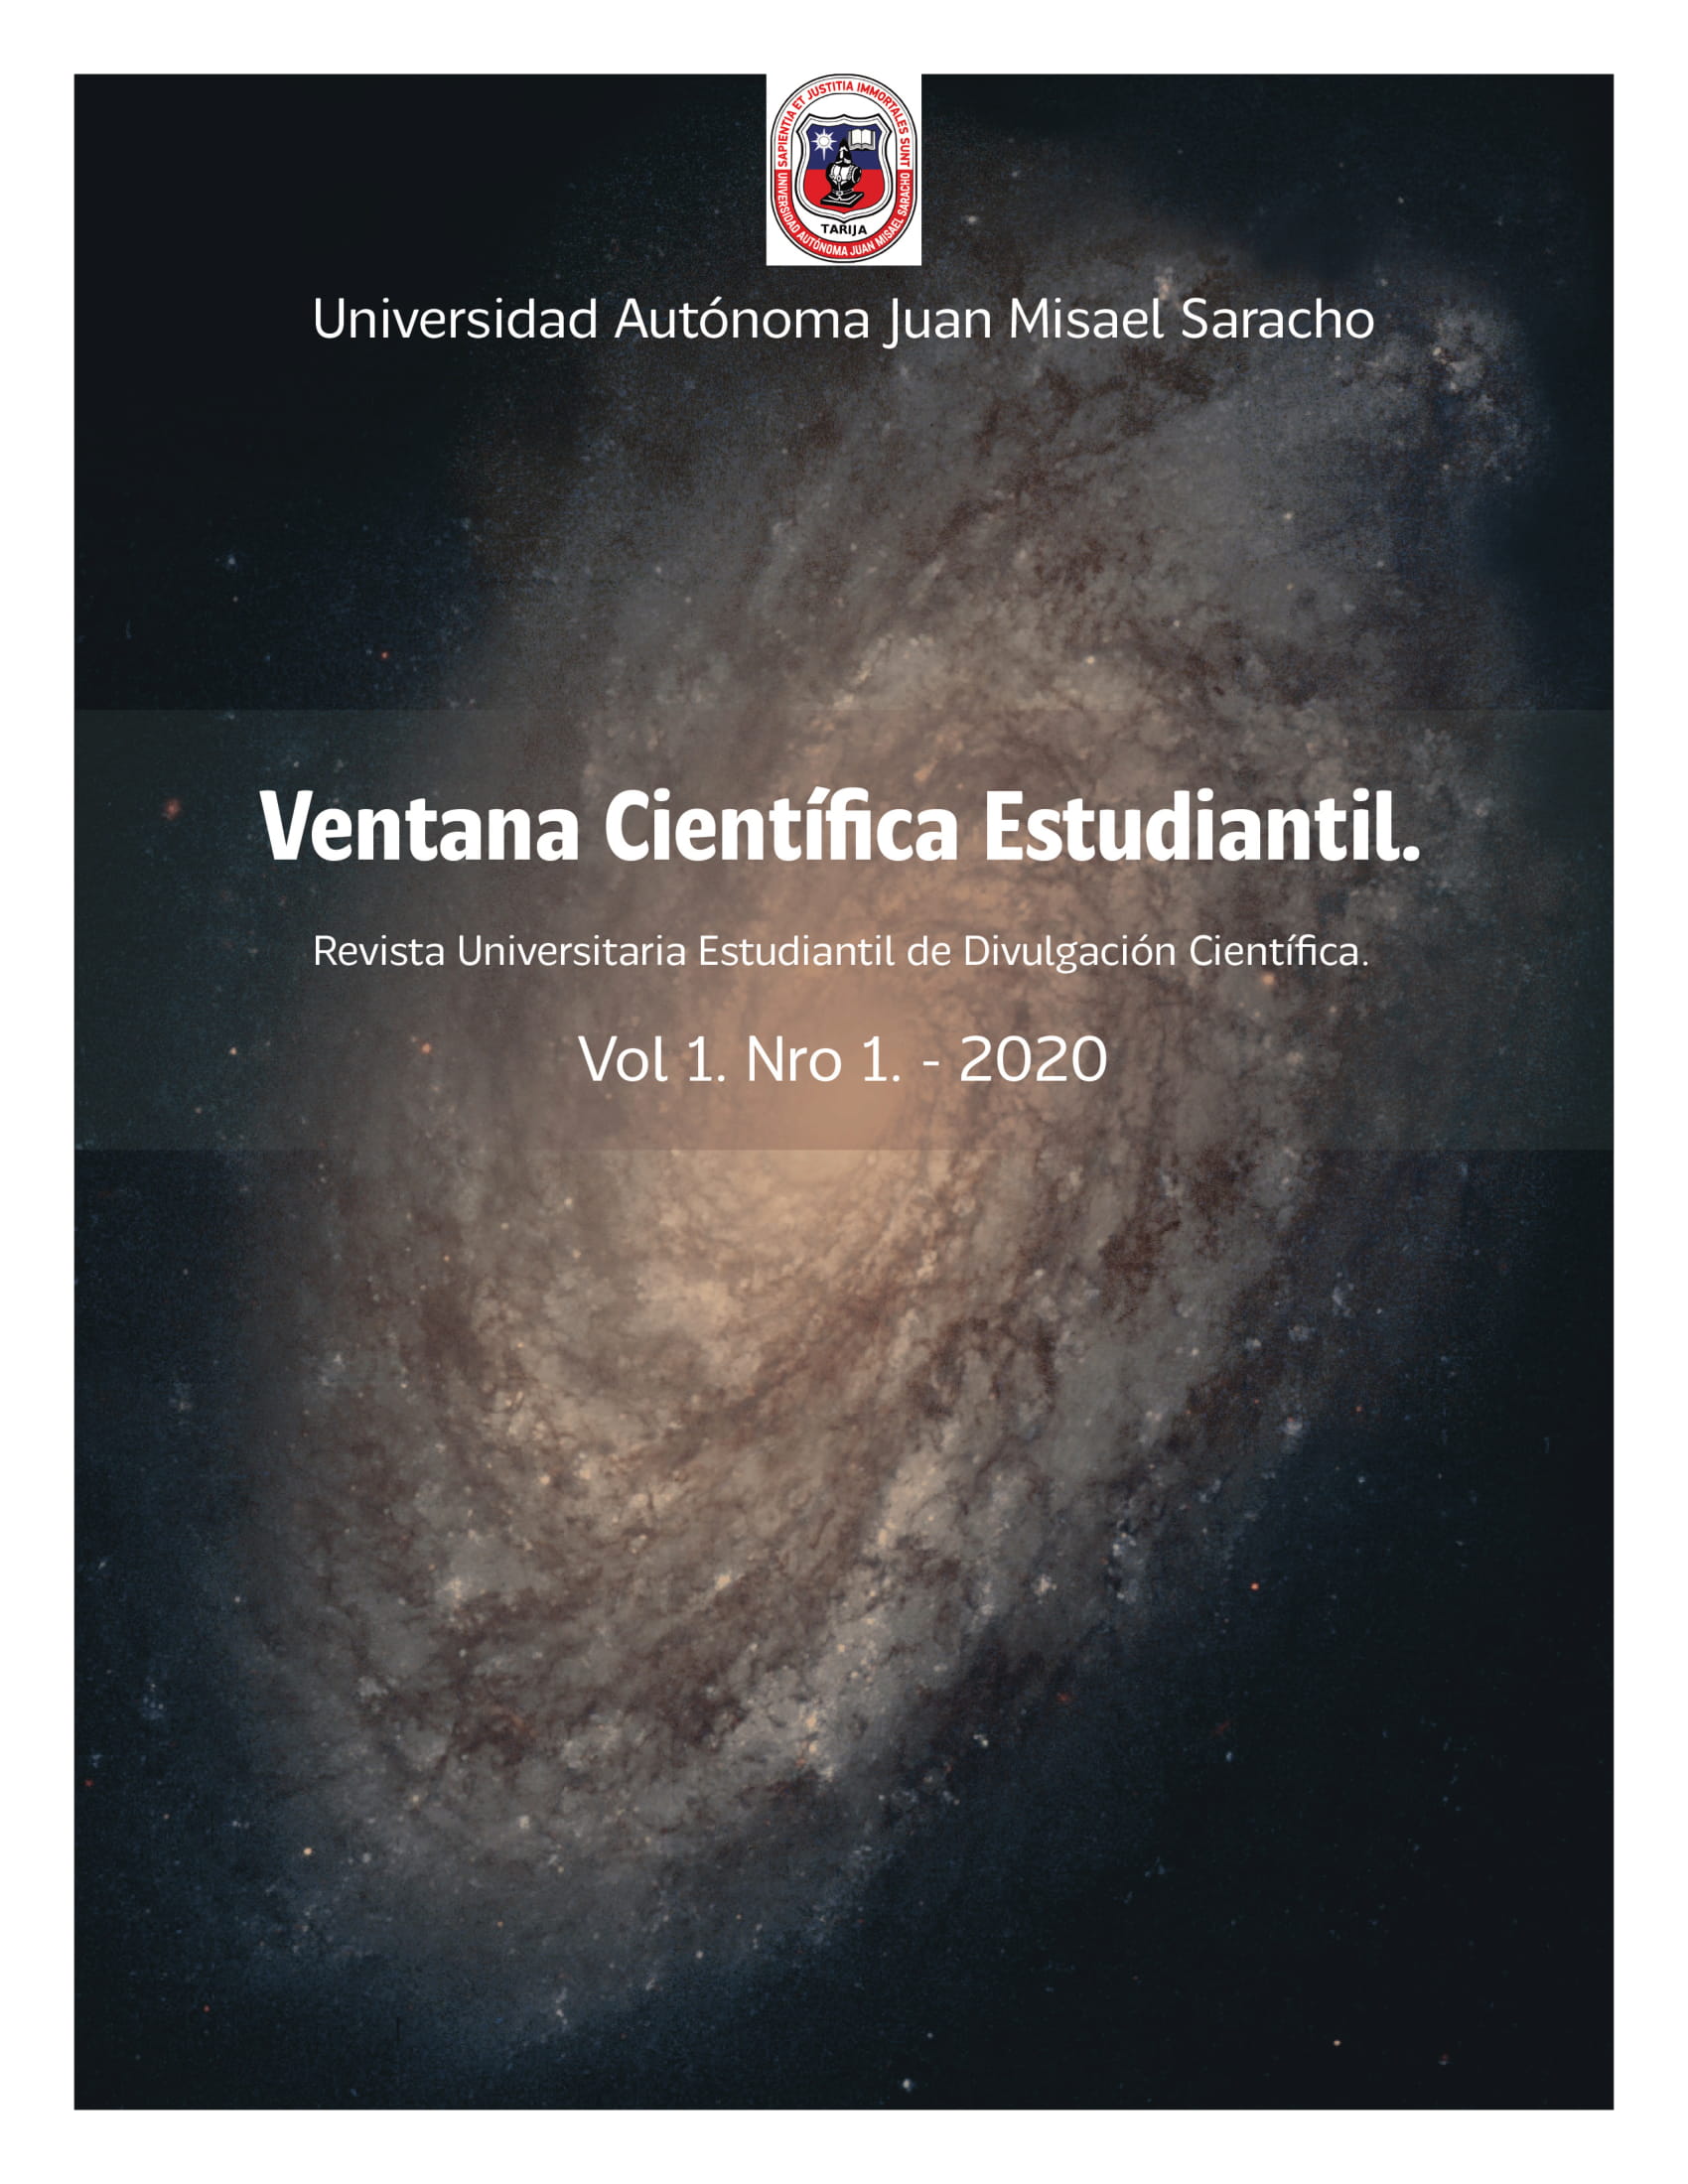 					Ver Vol. 1 Núm. 1 (2020): Ventana Científica Estudiantil 
				